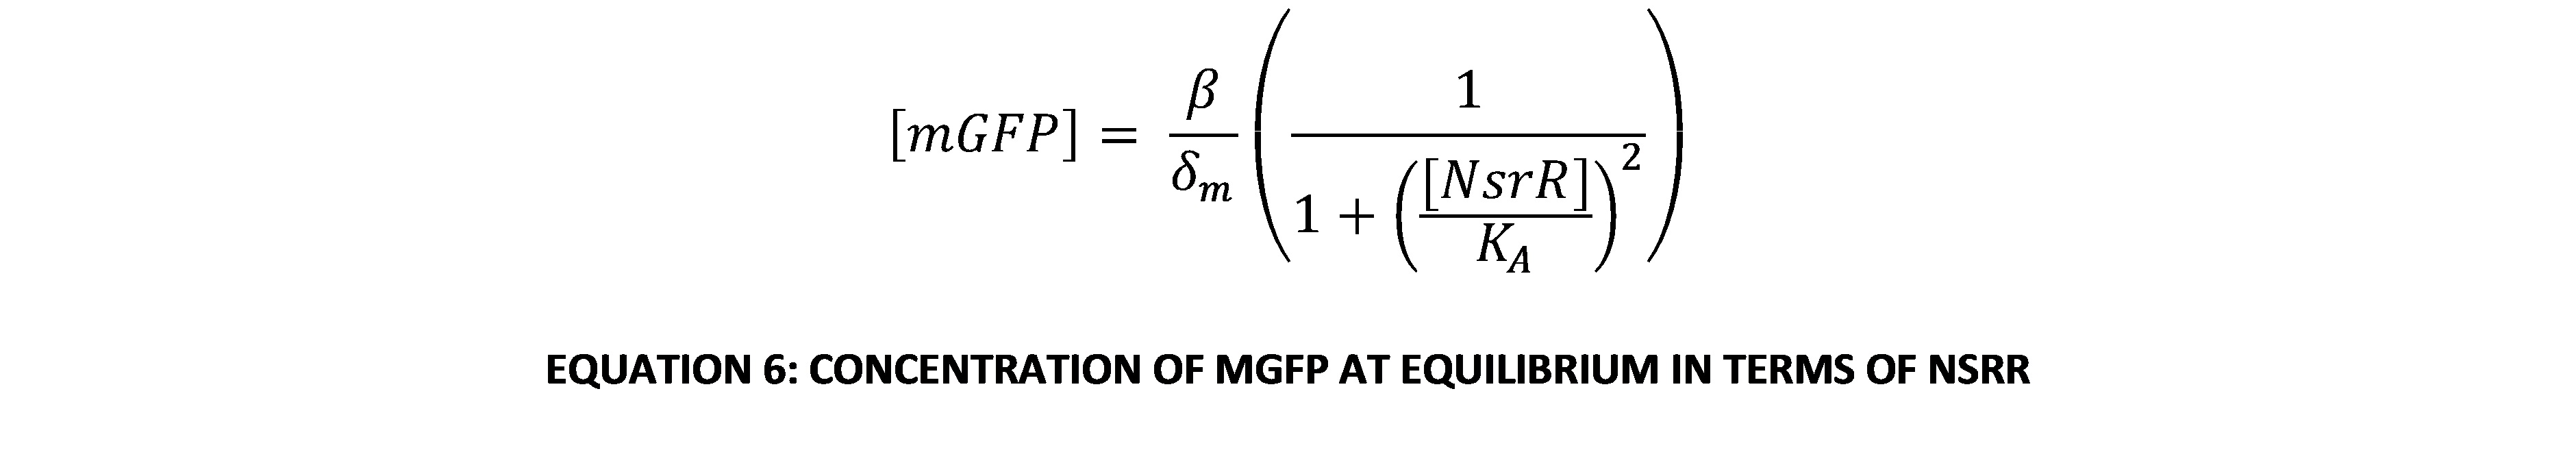 BCCS-Bristol GRN equation 6